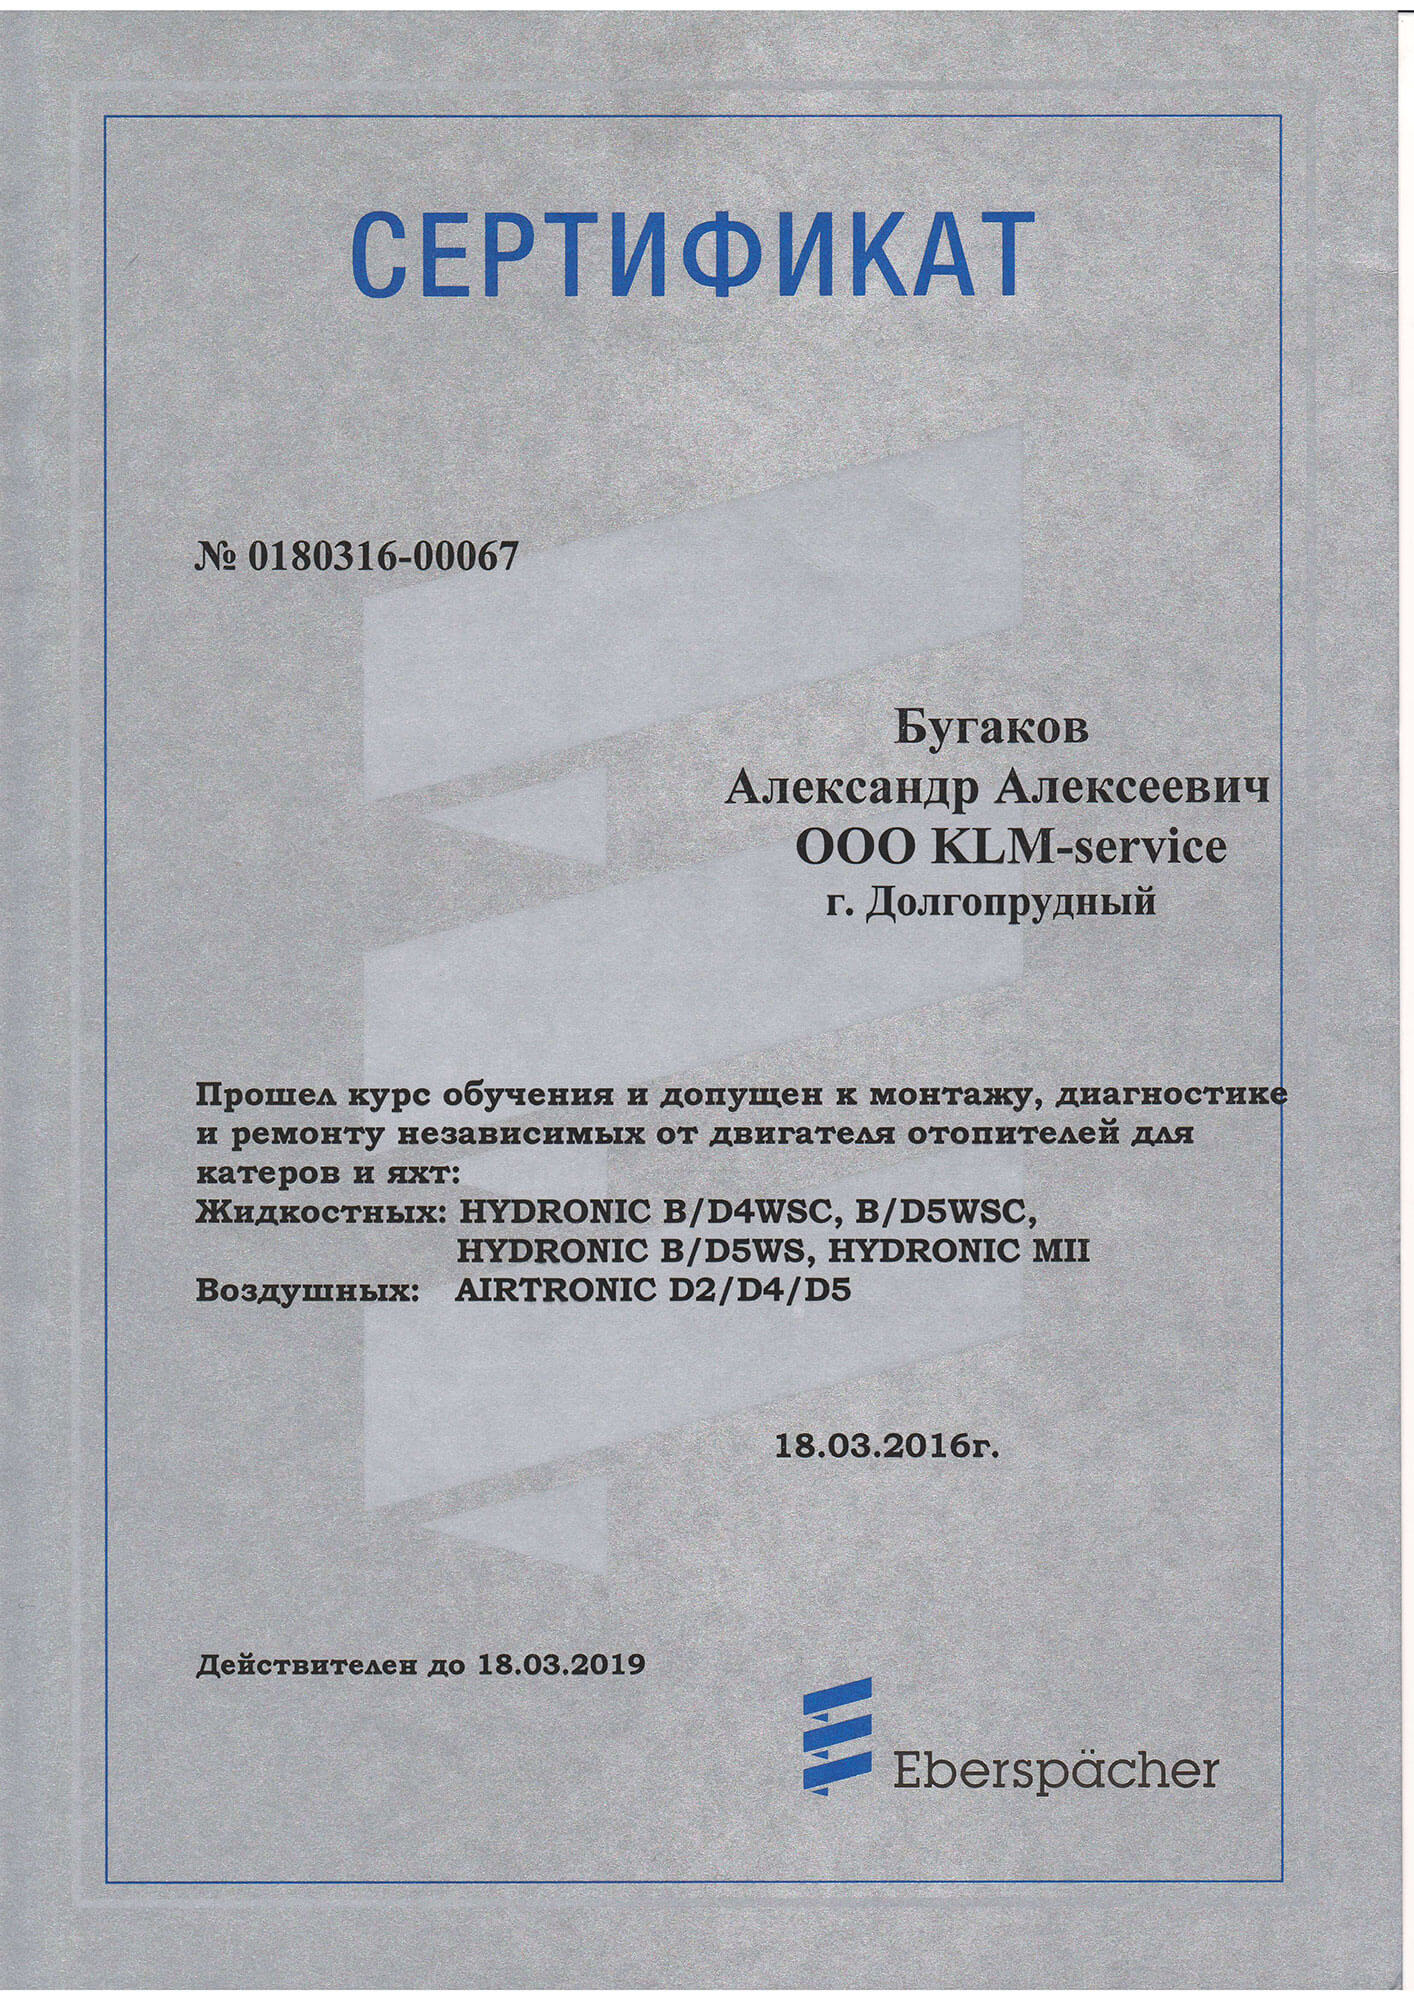 Сертификат Ebersparcher